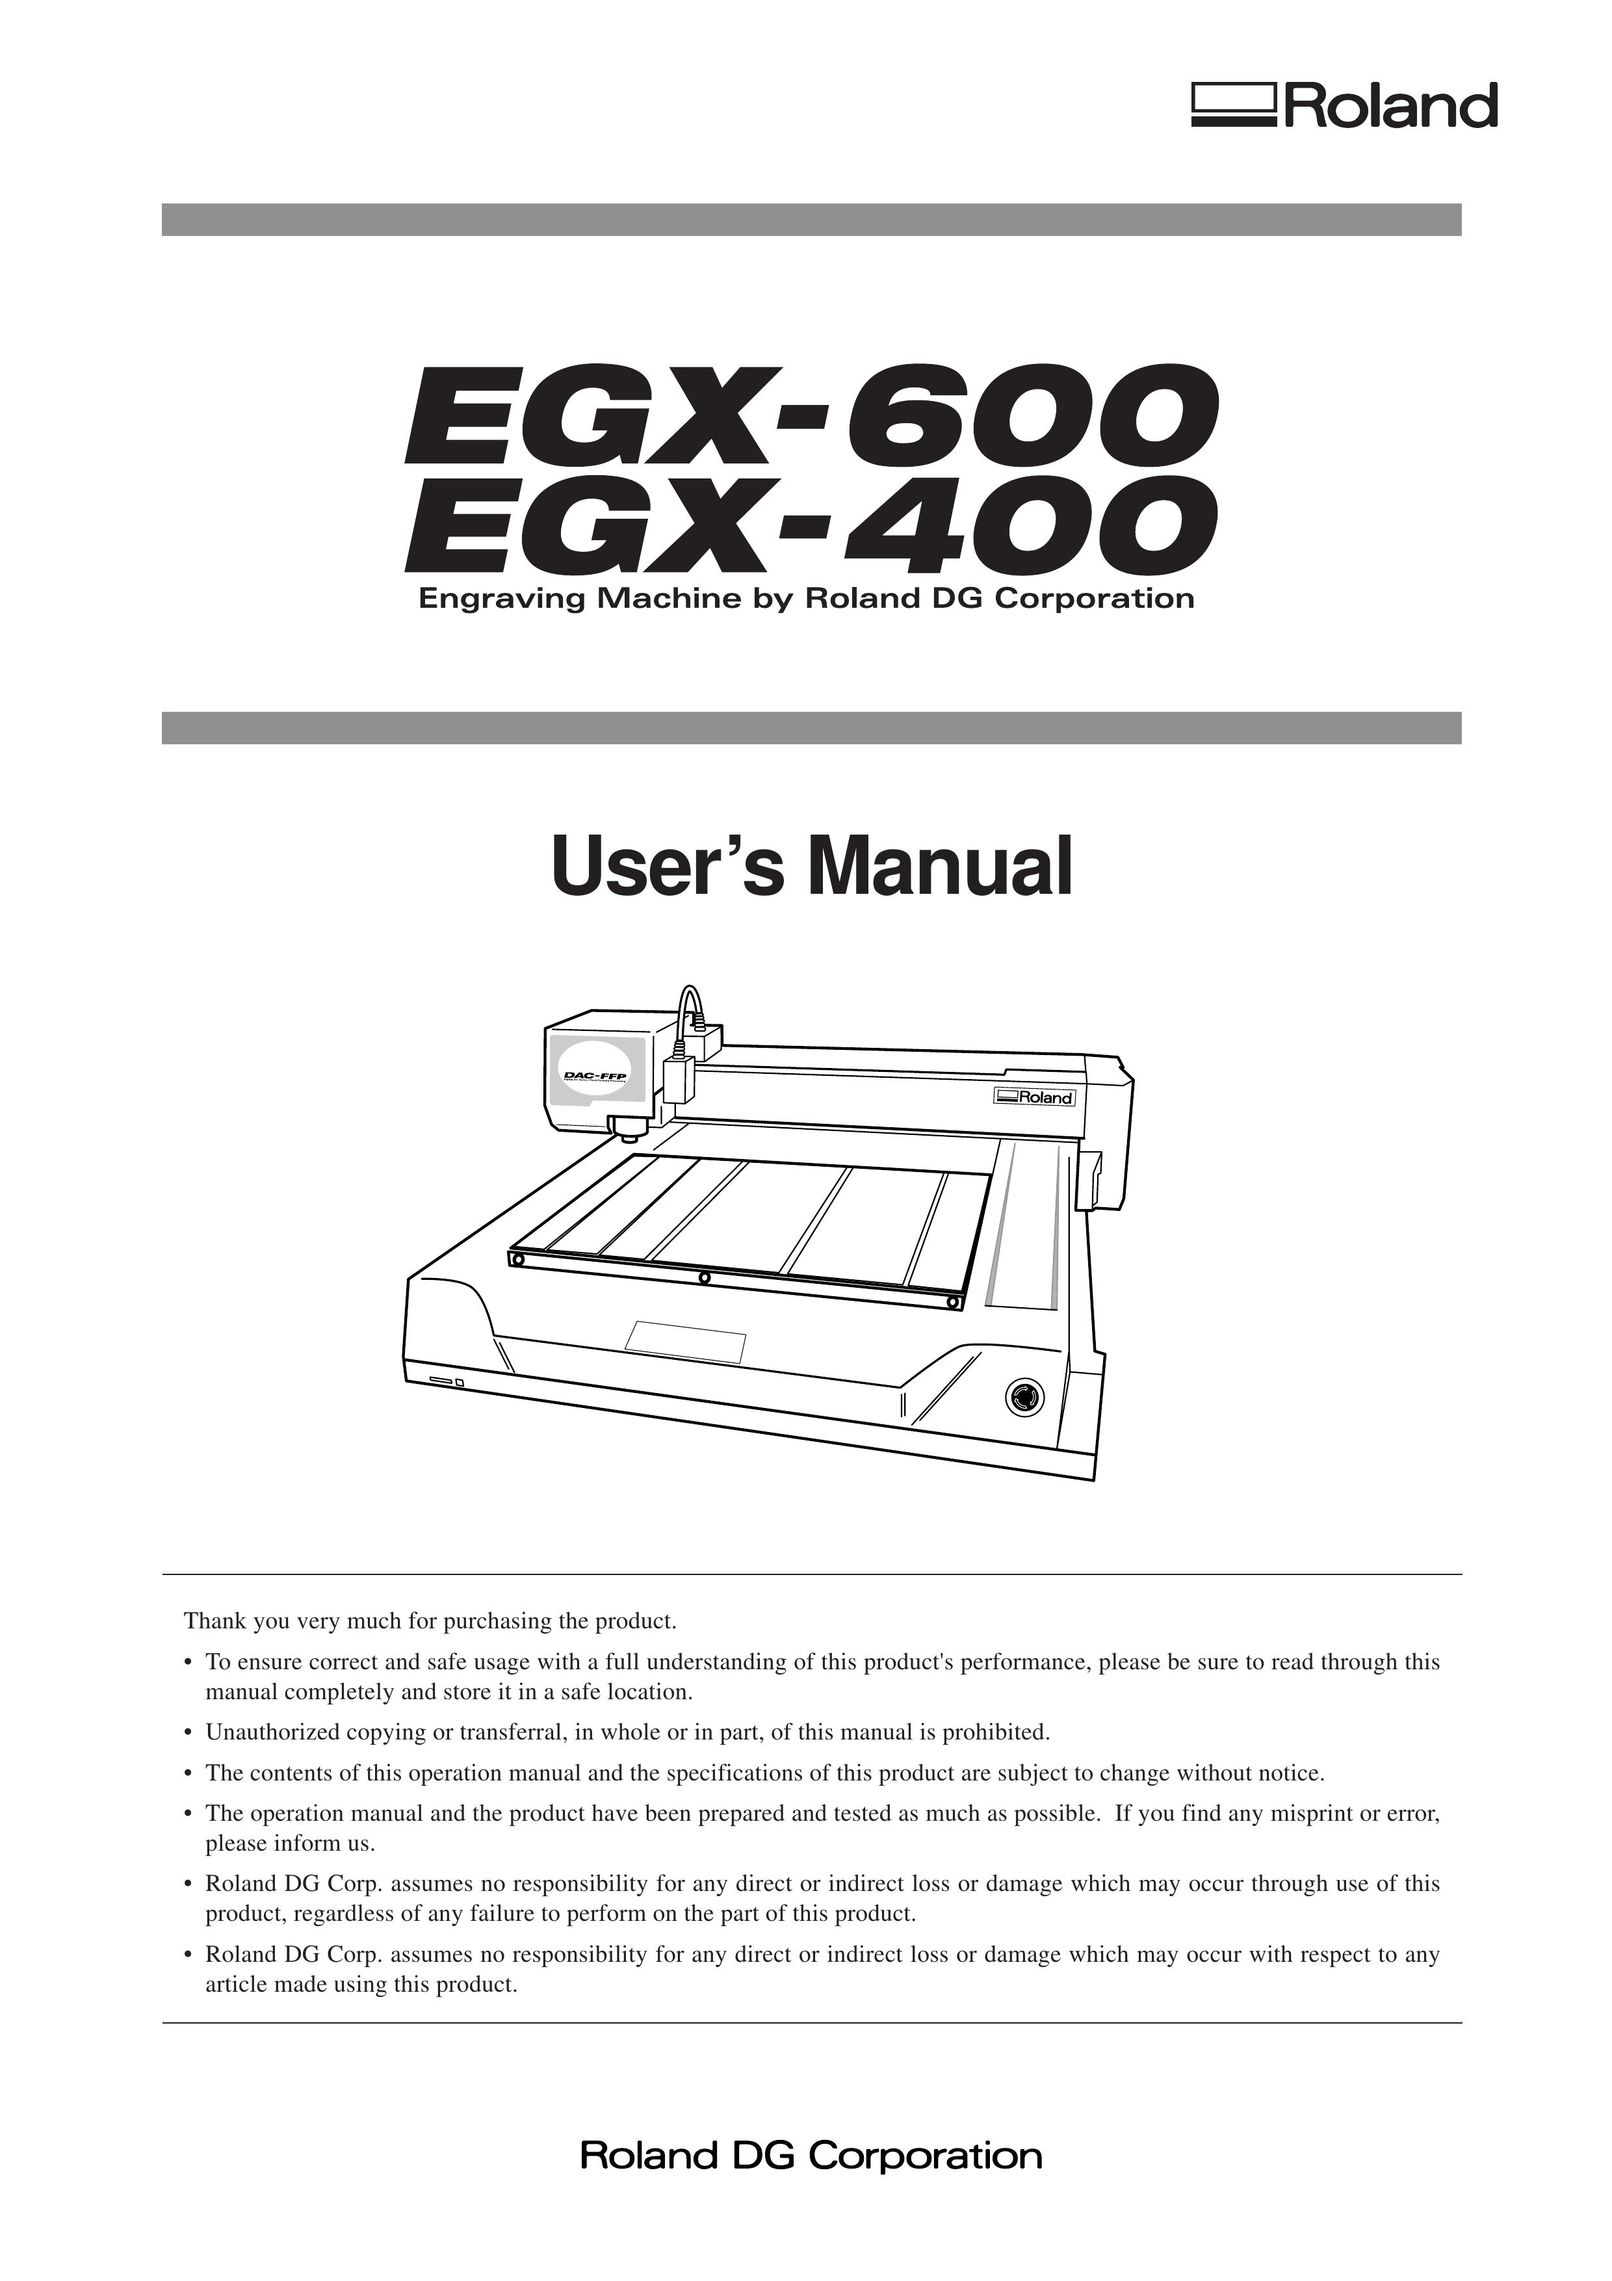 IBM EGX-600 Engraver User Manual